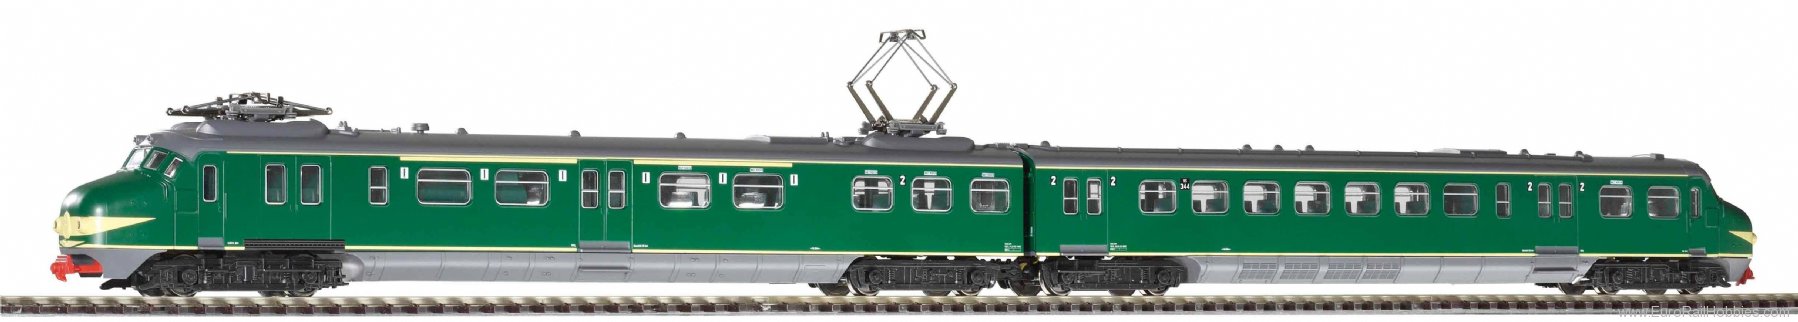 Piko 57577 Sound electric railcar Hondekop NS III, inclu